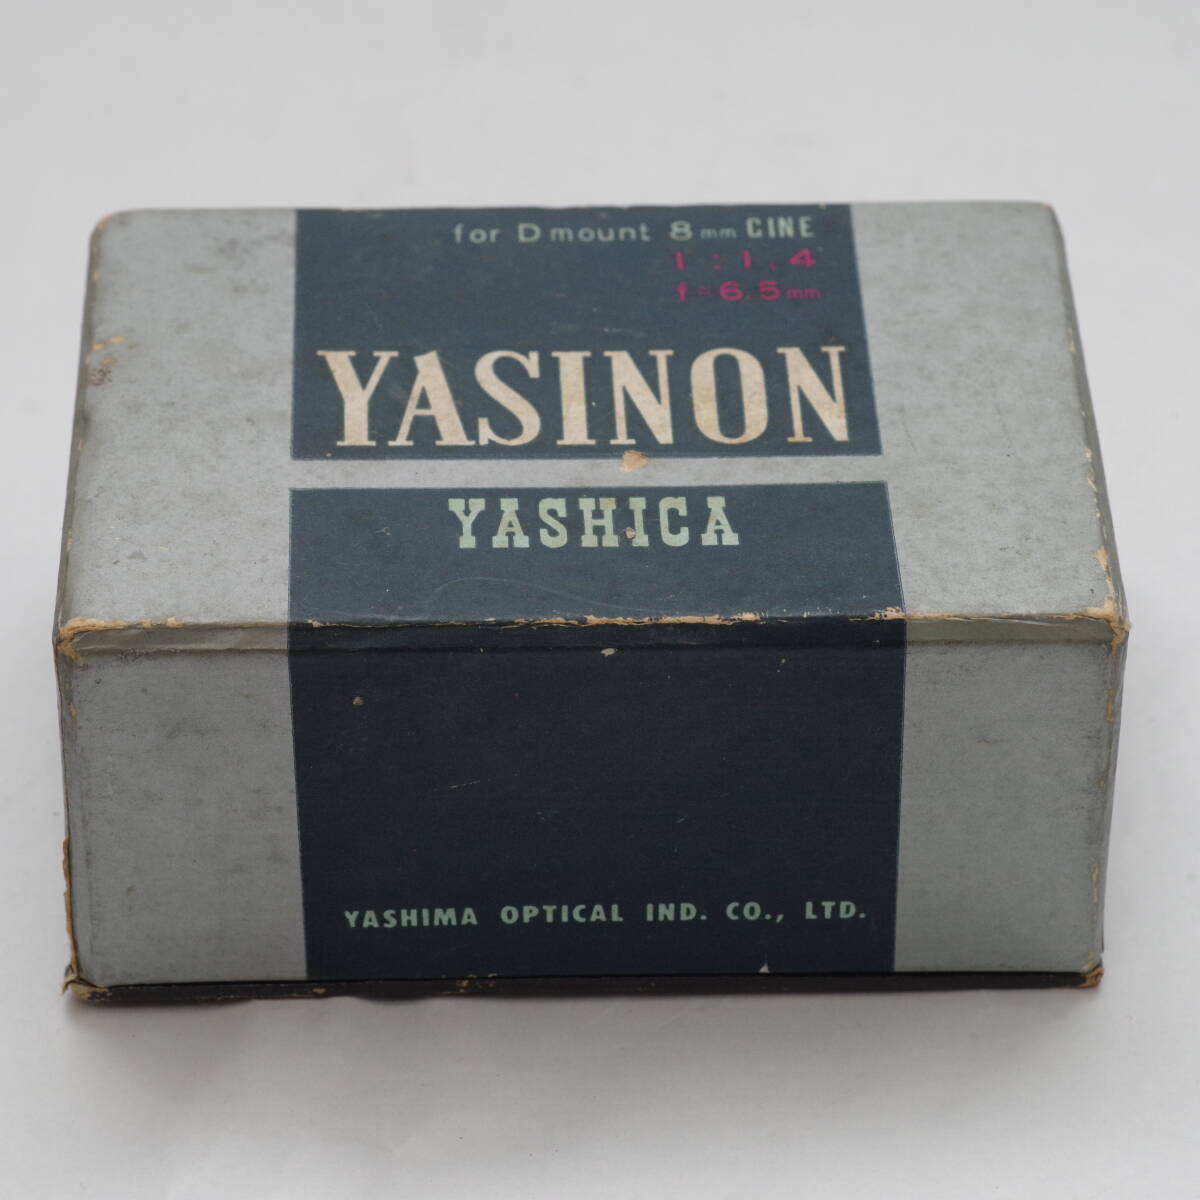  Yashica (YASHICA)sine cocos nucifera non 38mm F1.4 (CINE YASHINON) D mount 